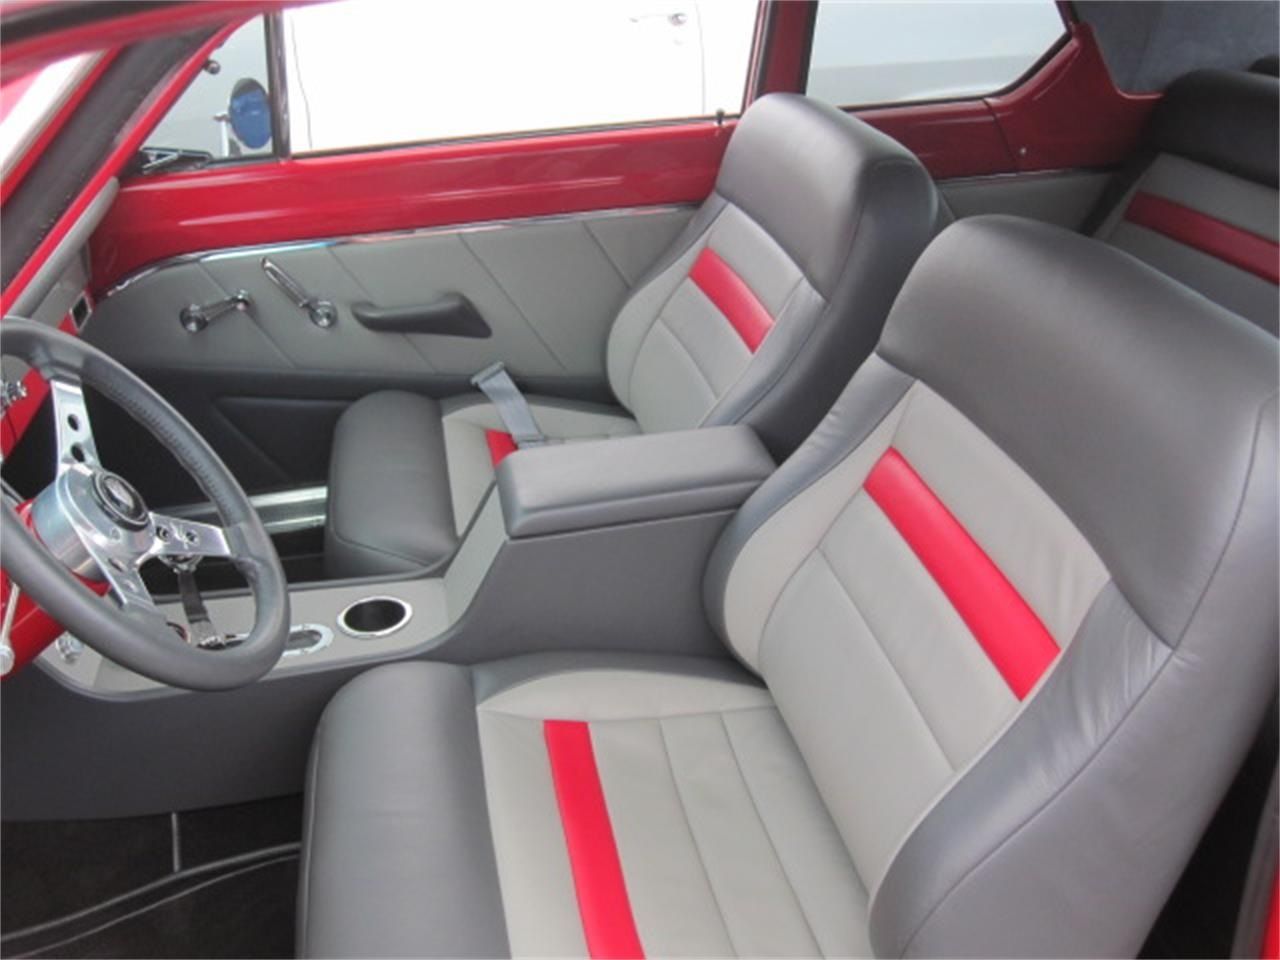 a 1966 Dodge Dart custom interior b